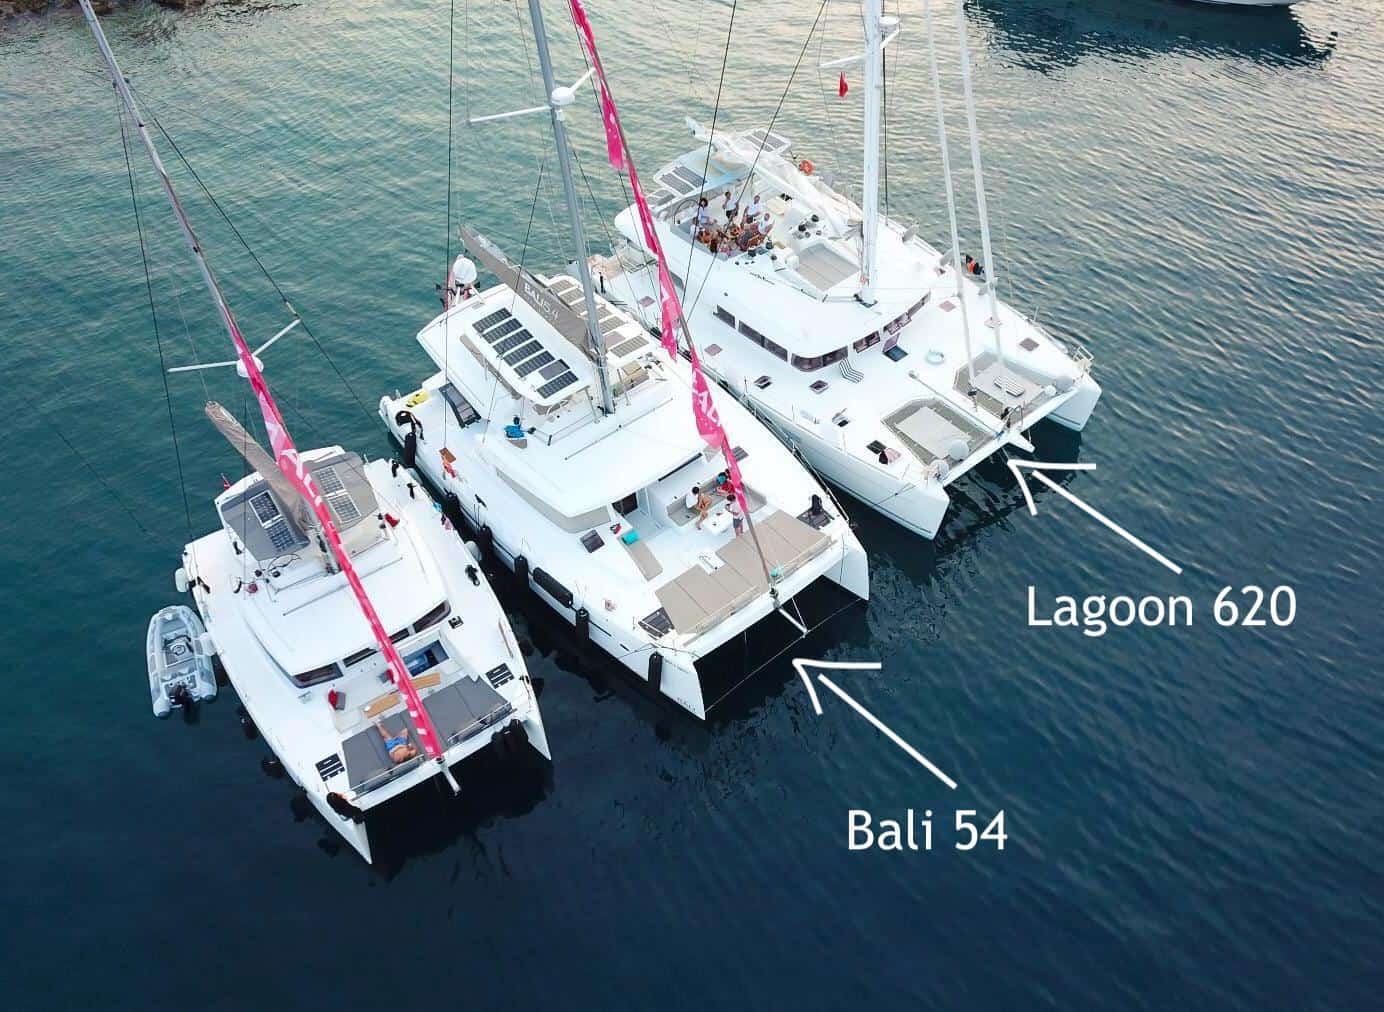 Bali 5.4 catamaran comparisons